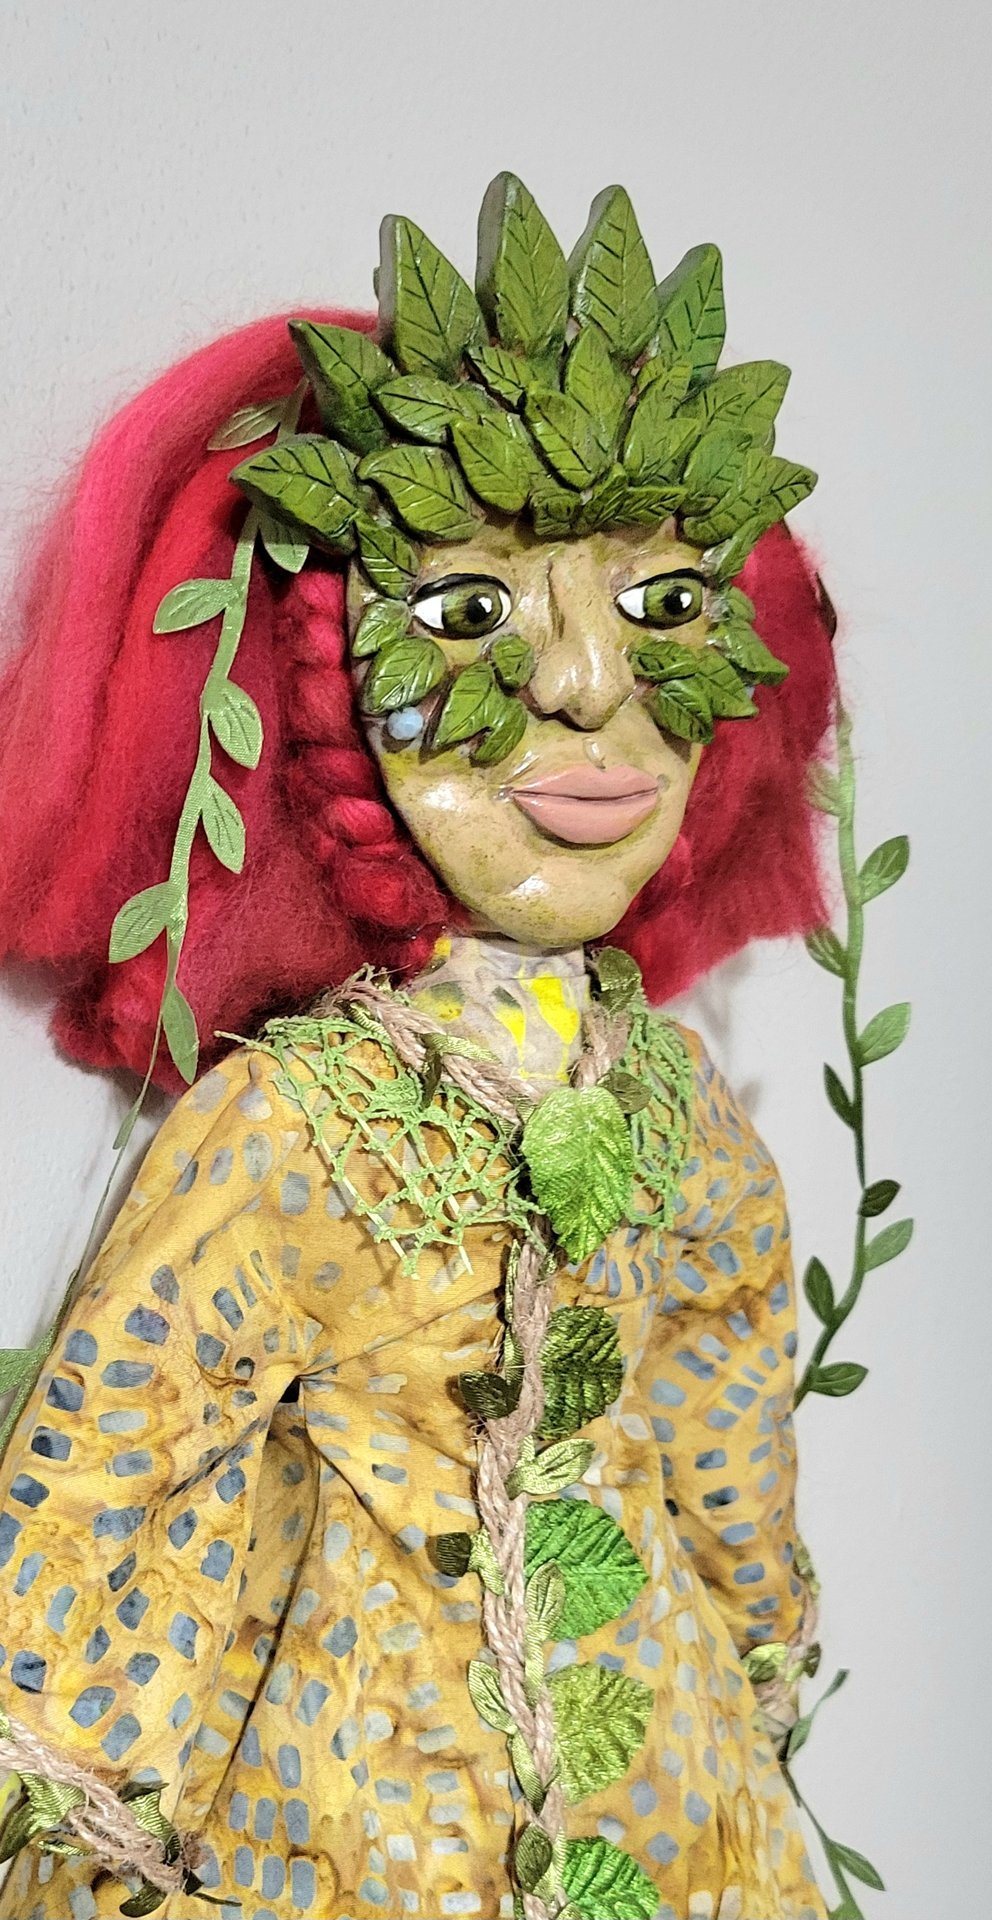 Greenwoman OOAK Spirit Doll 